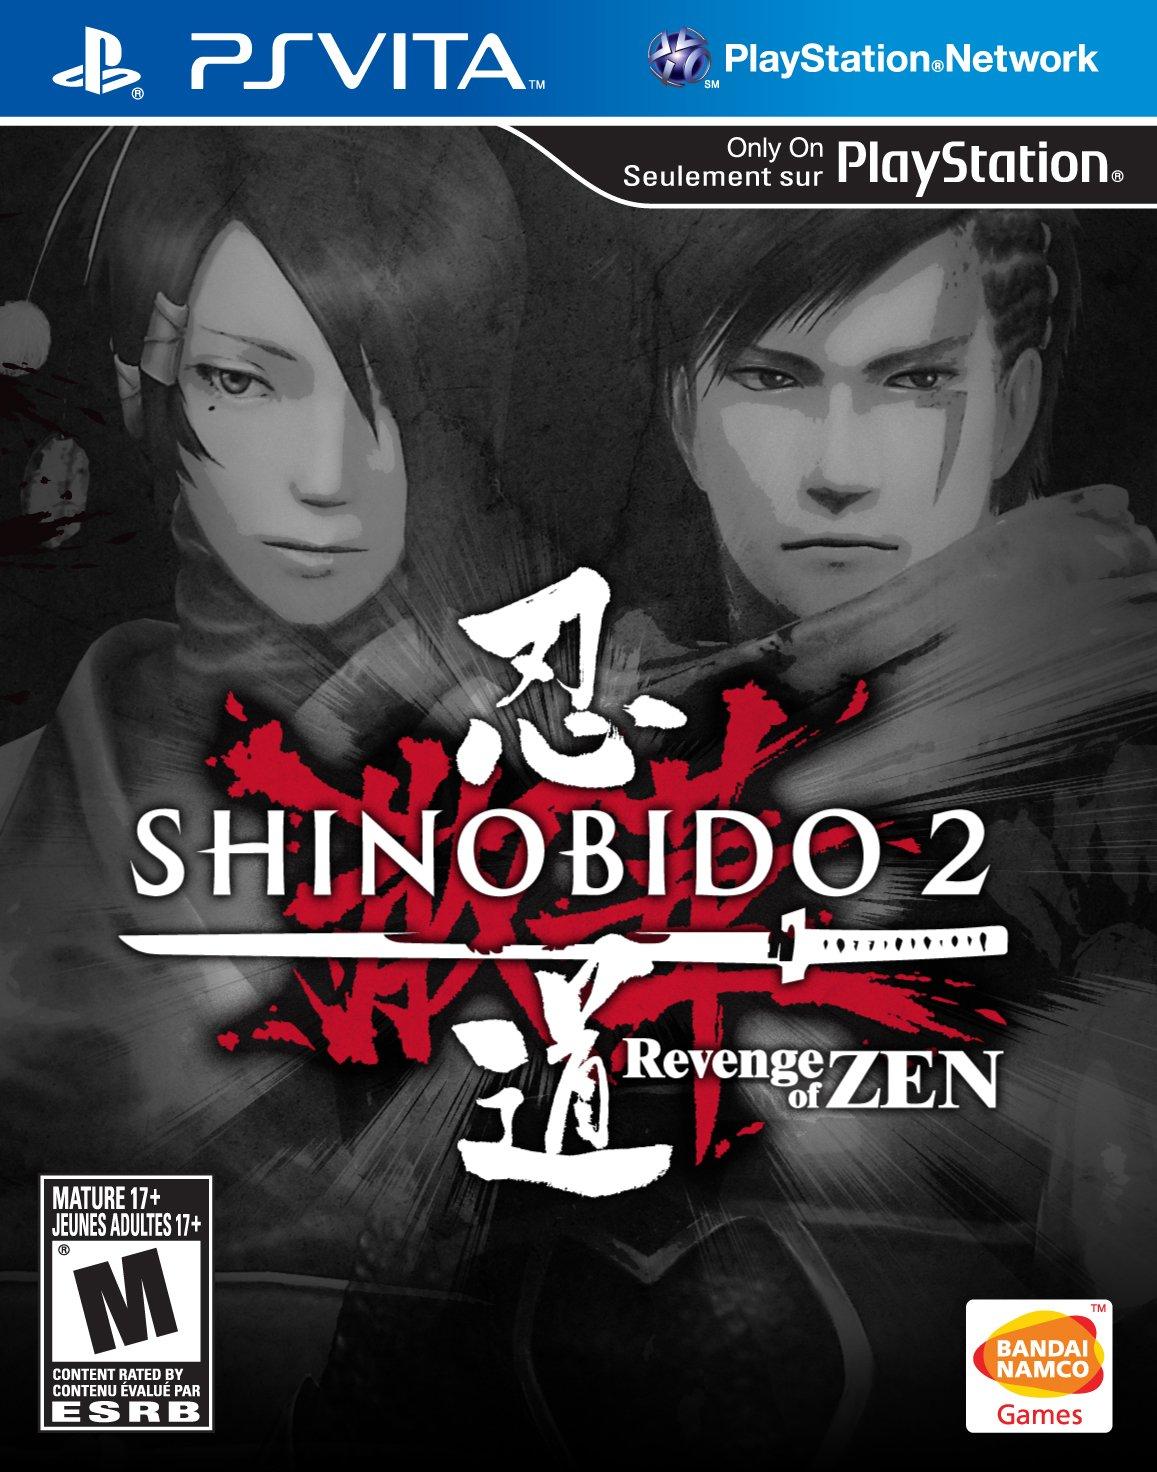 Shinobido 2: The Revenge of Zen - PS Vita | Bandai Namco | GameStop